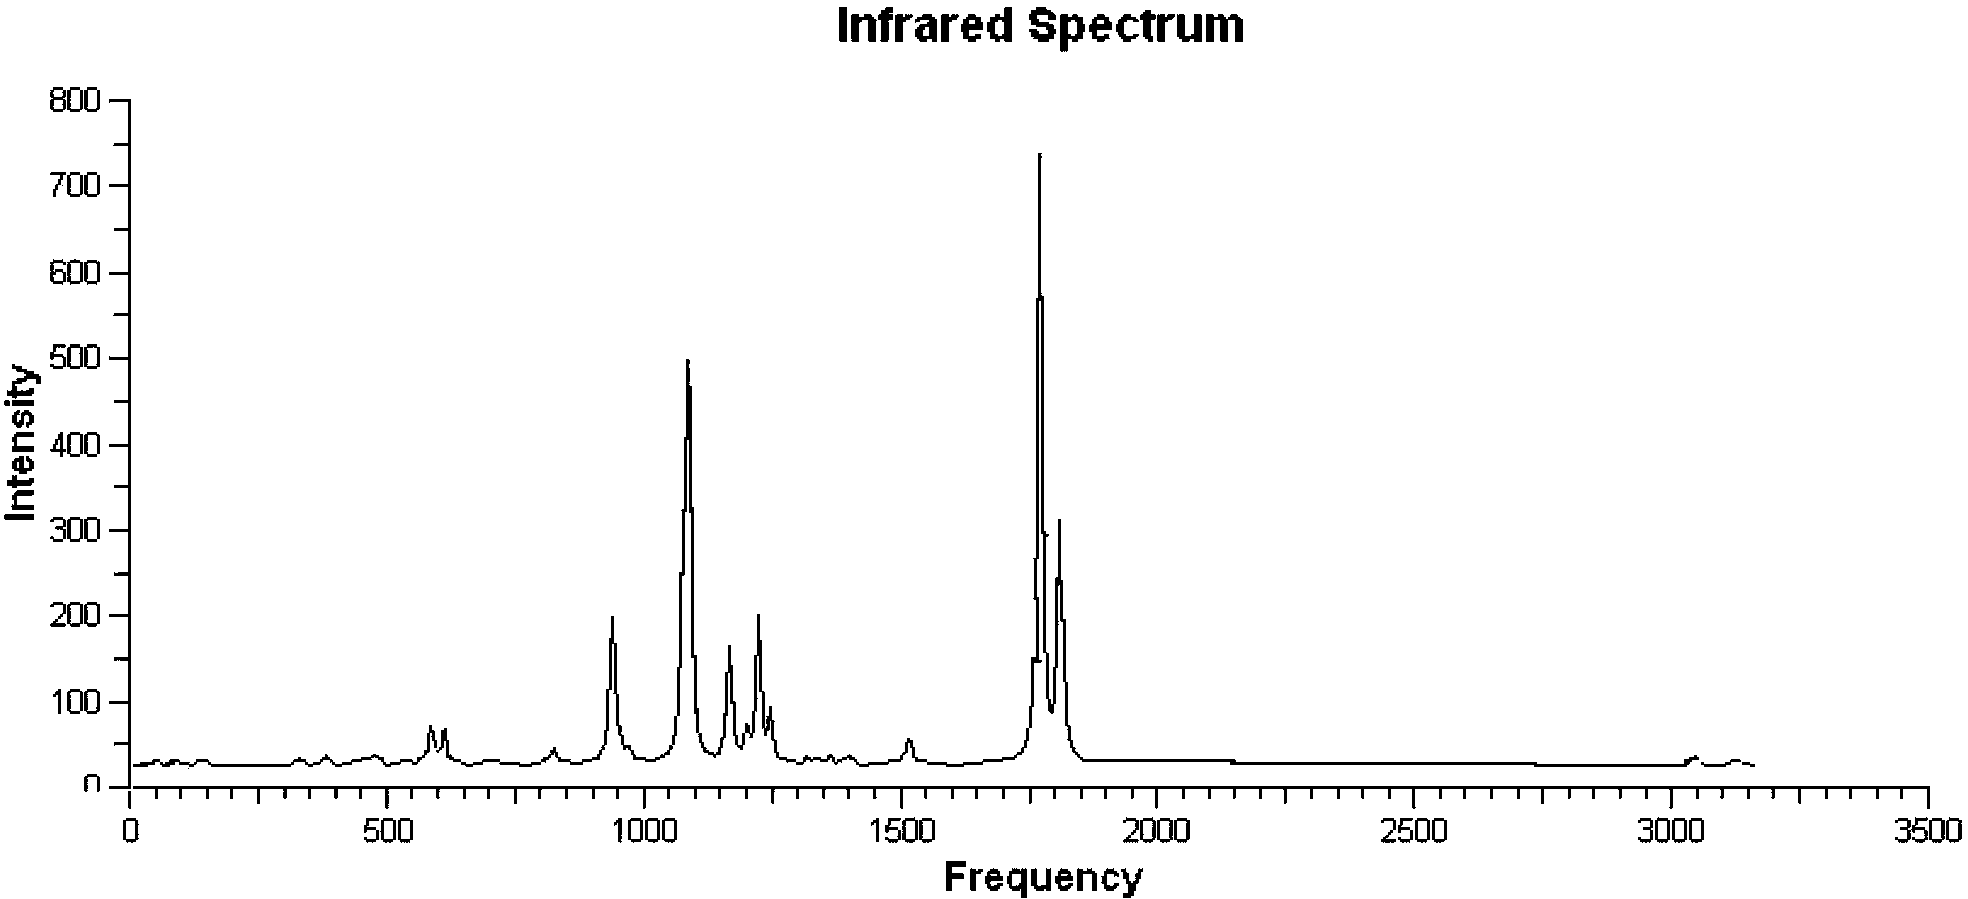 Synthesis method of spiro-compound 2,4,8,10-tetracarbonyl-3,9-dioxaspiro[5,5]undecane